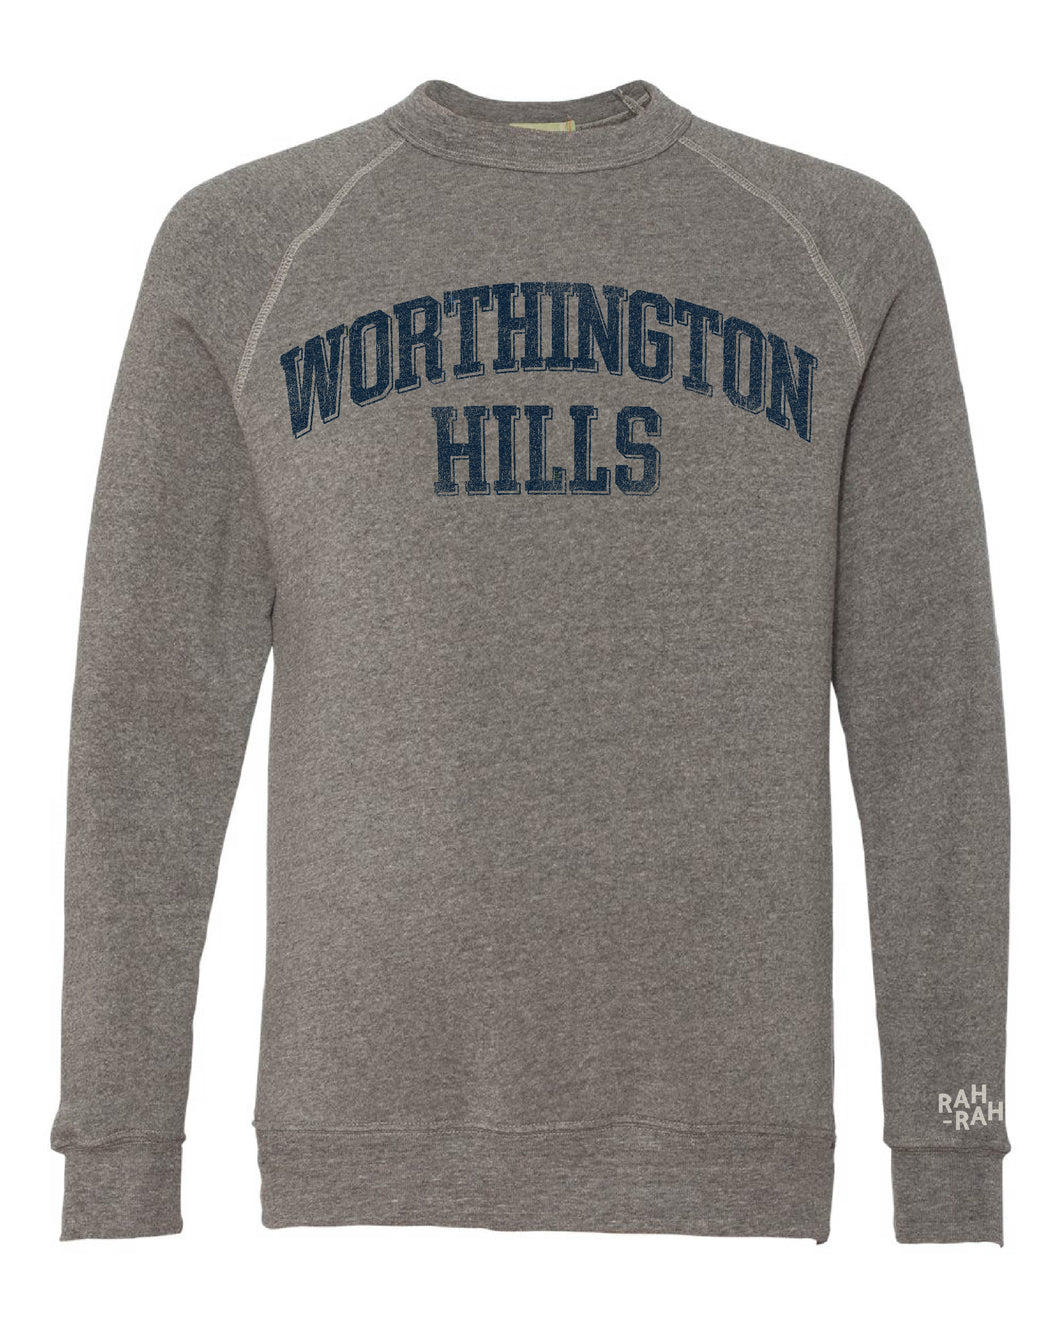 Worthington Hills Block GREY Sweatshirt | ADULT